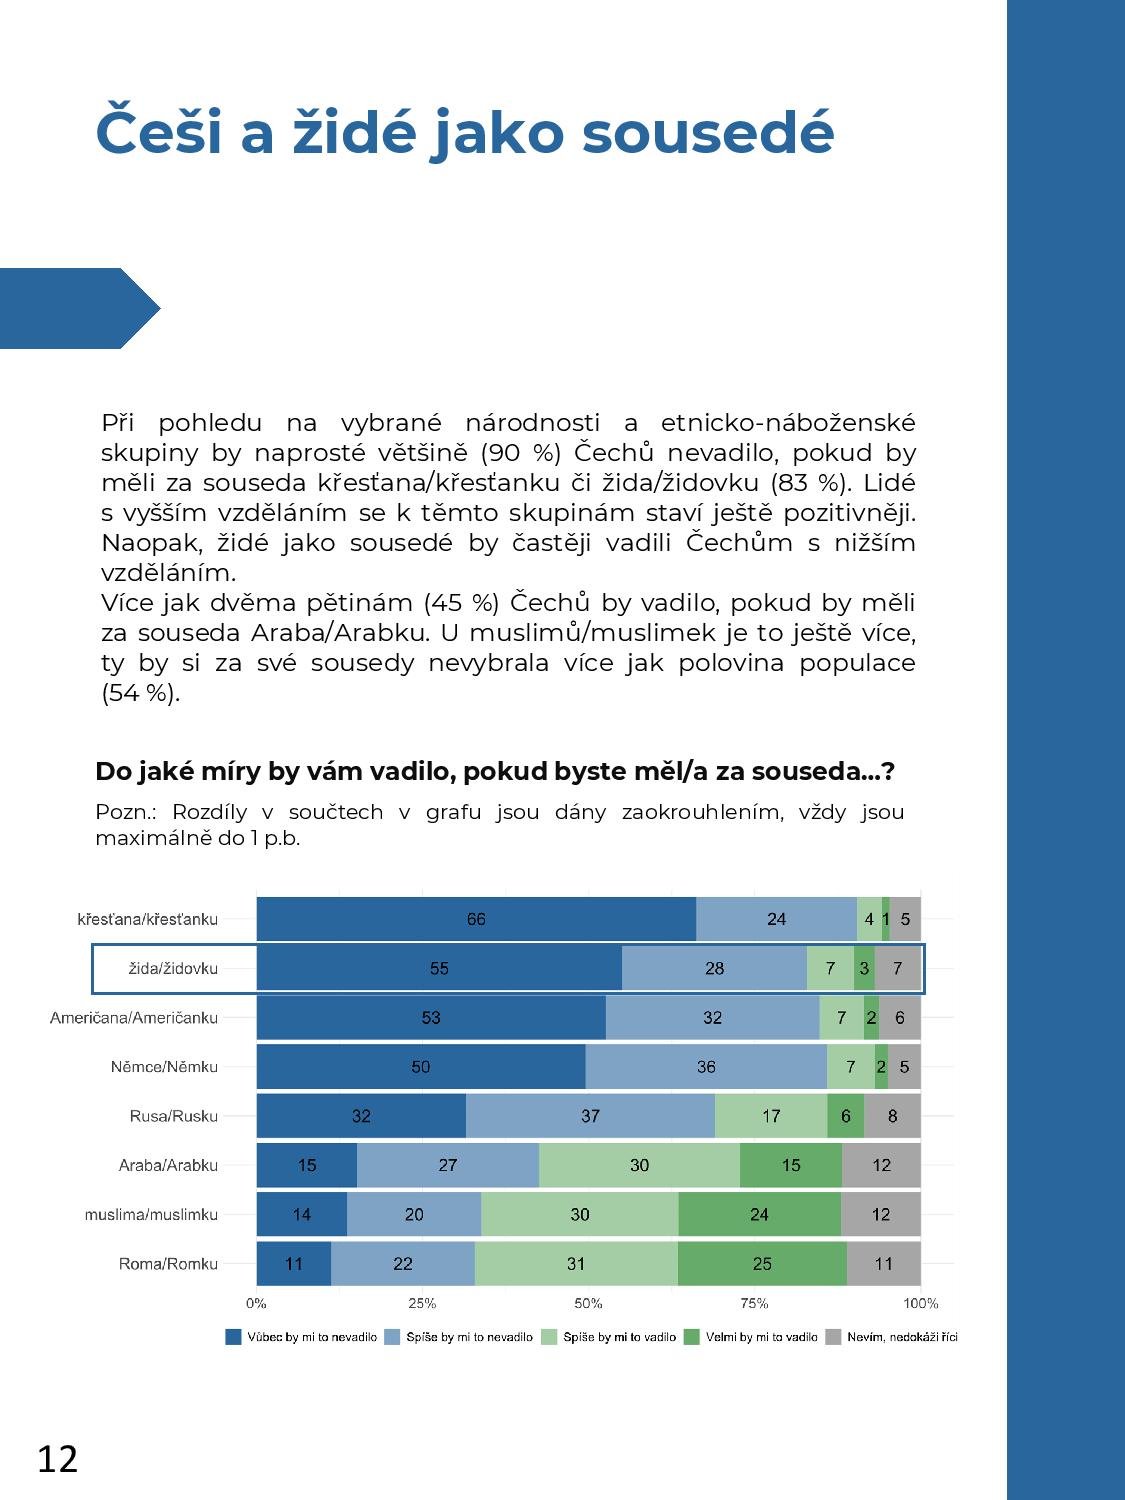 HCIS_PRCP_Public attitudes towards Israel_REPORT_CZ_Finální (2)-page-012.jpg